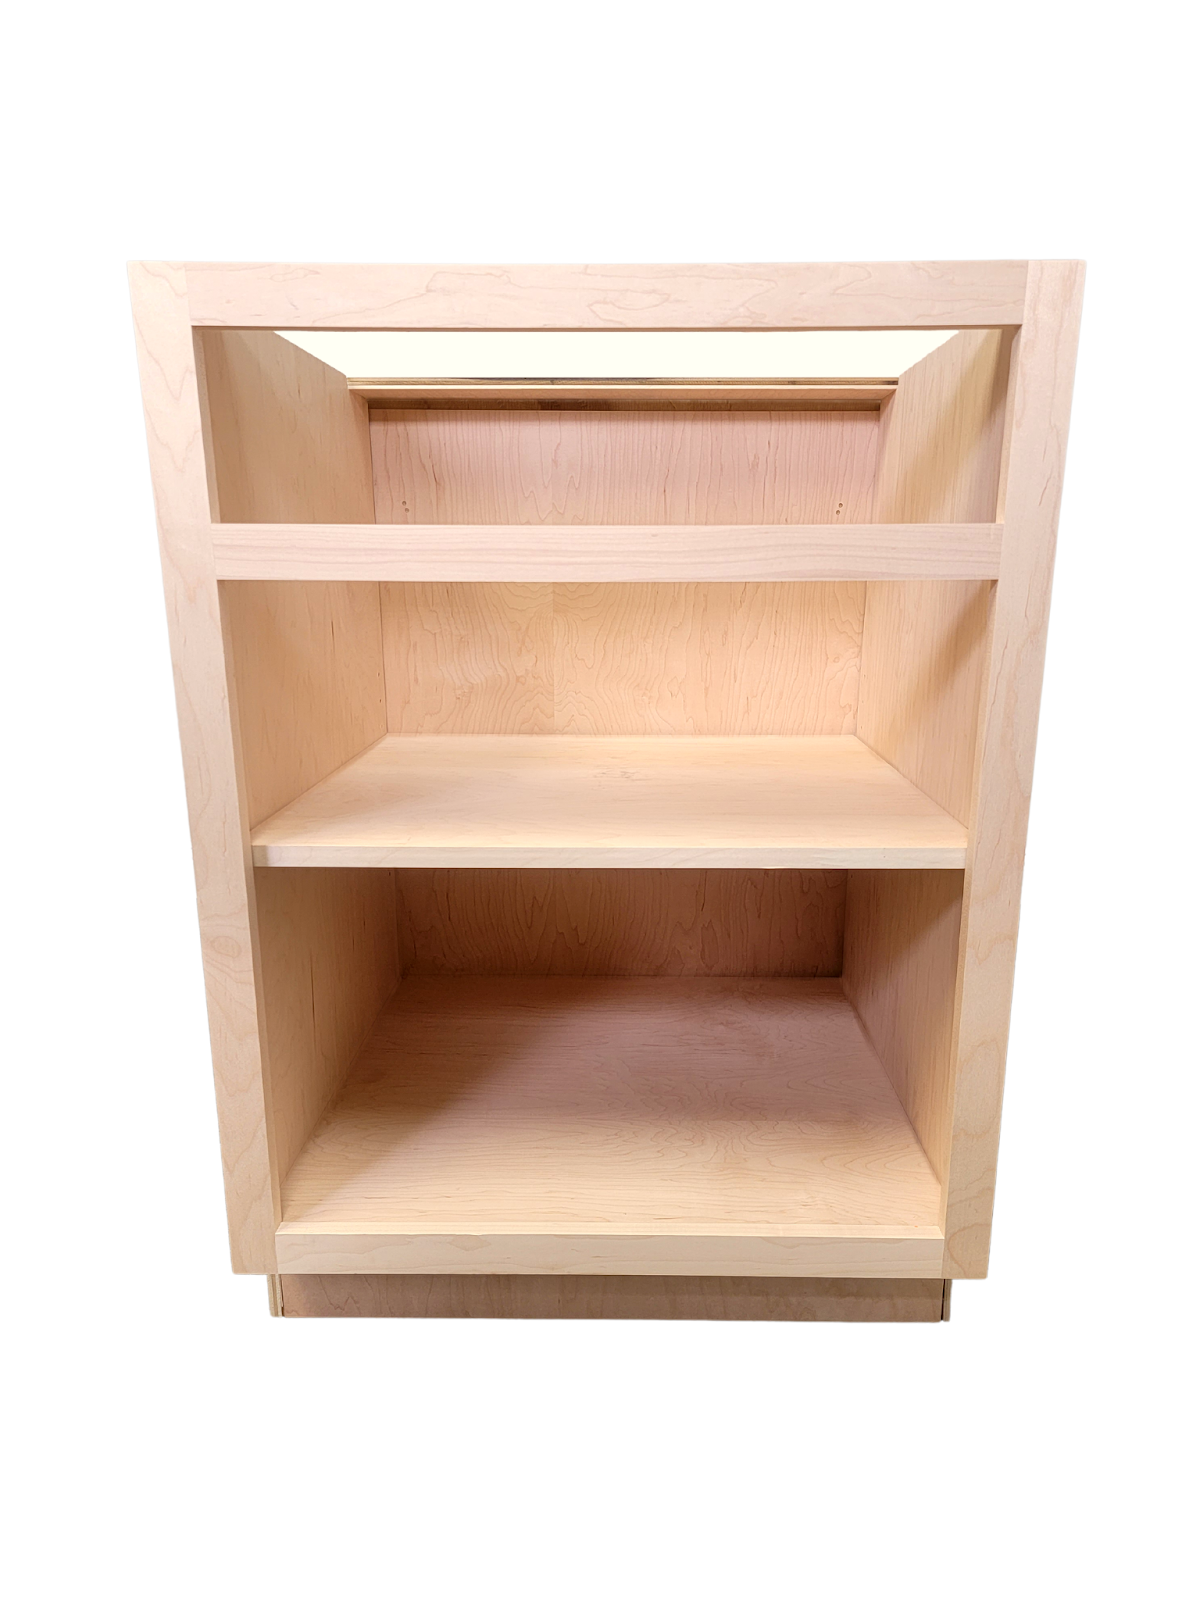 plywood cabinet box